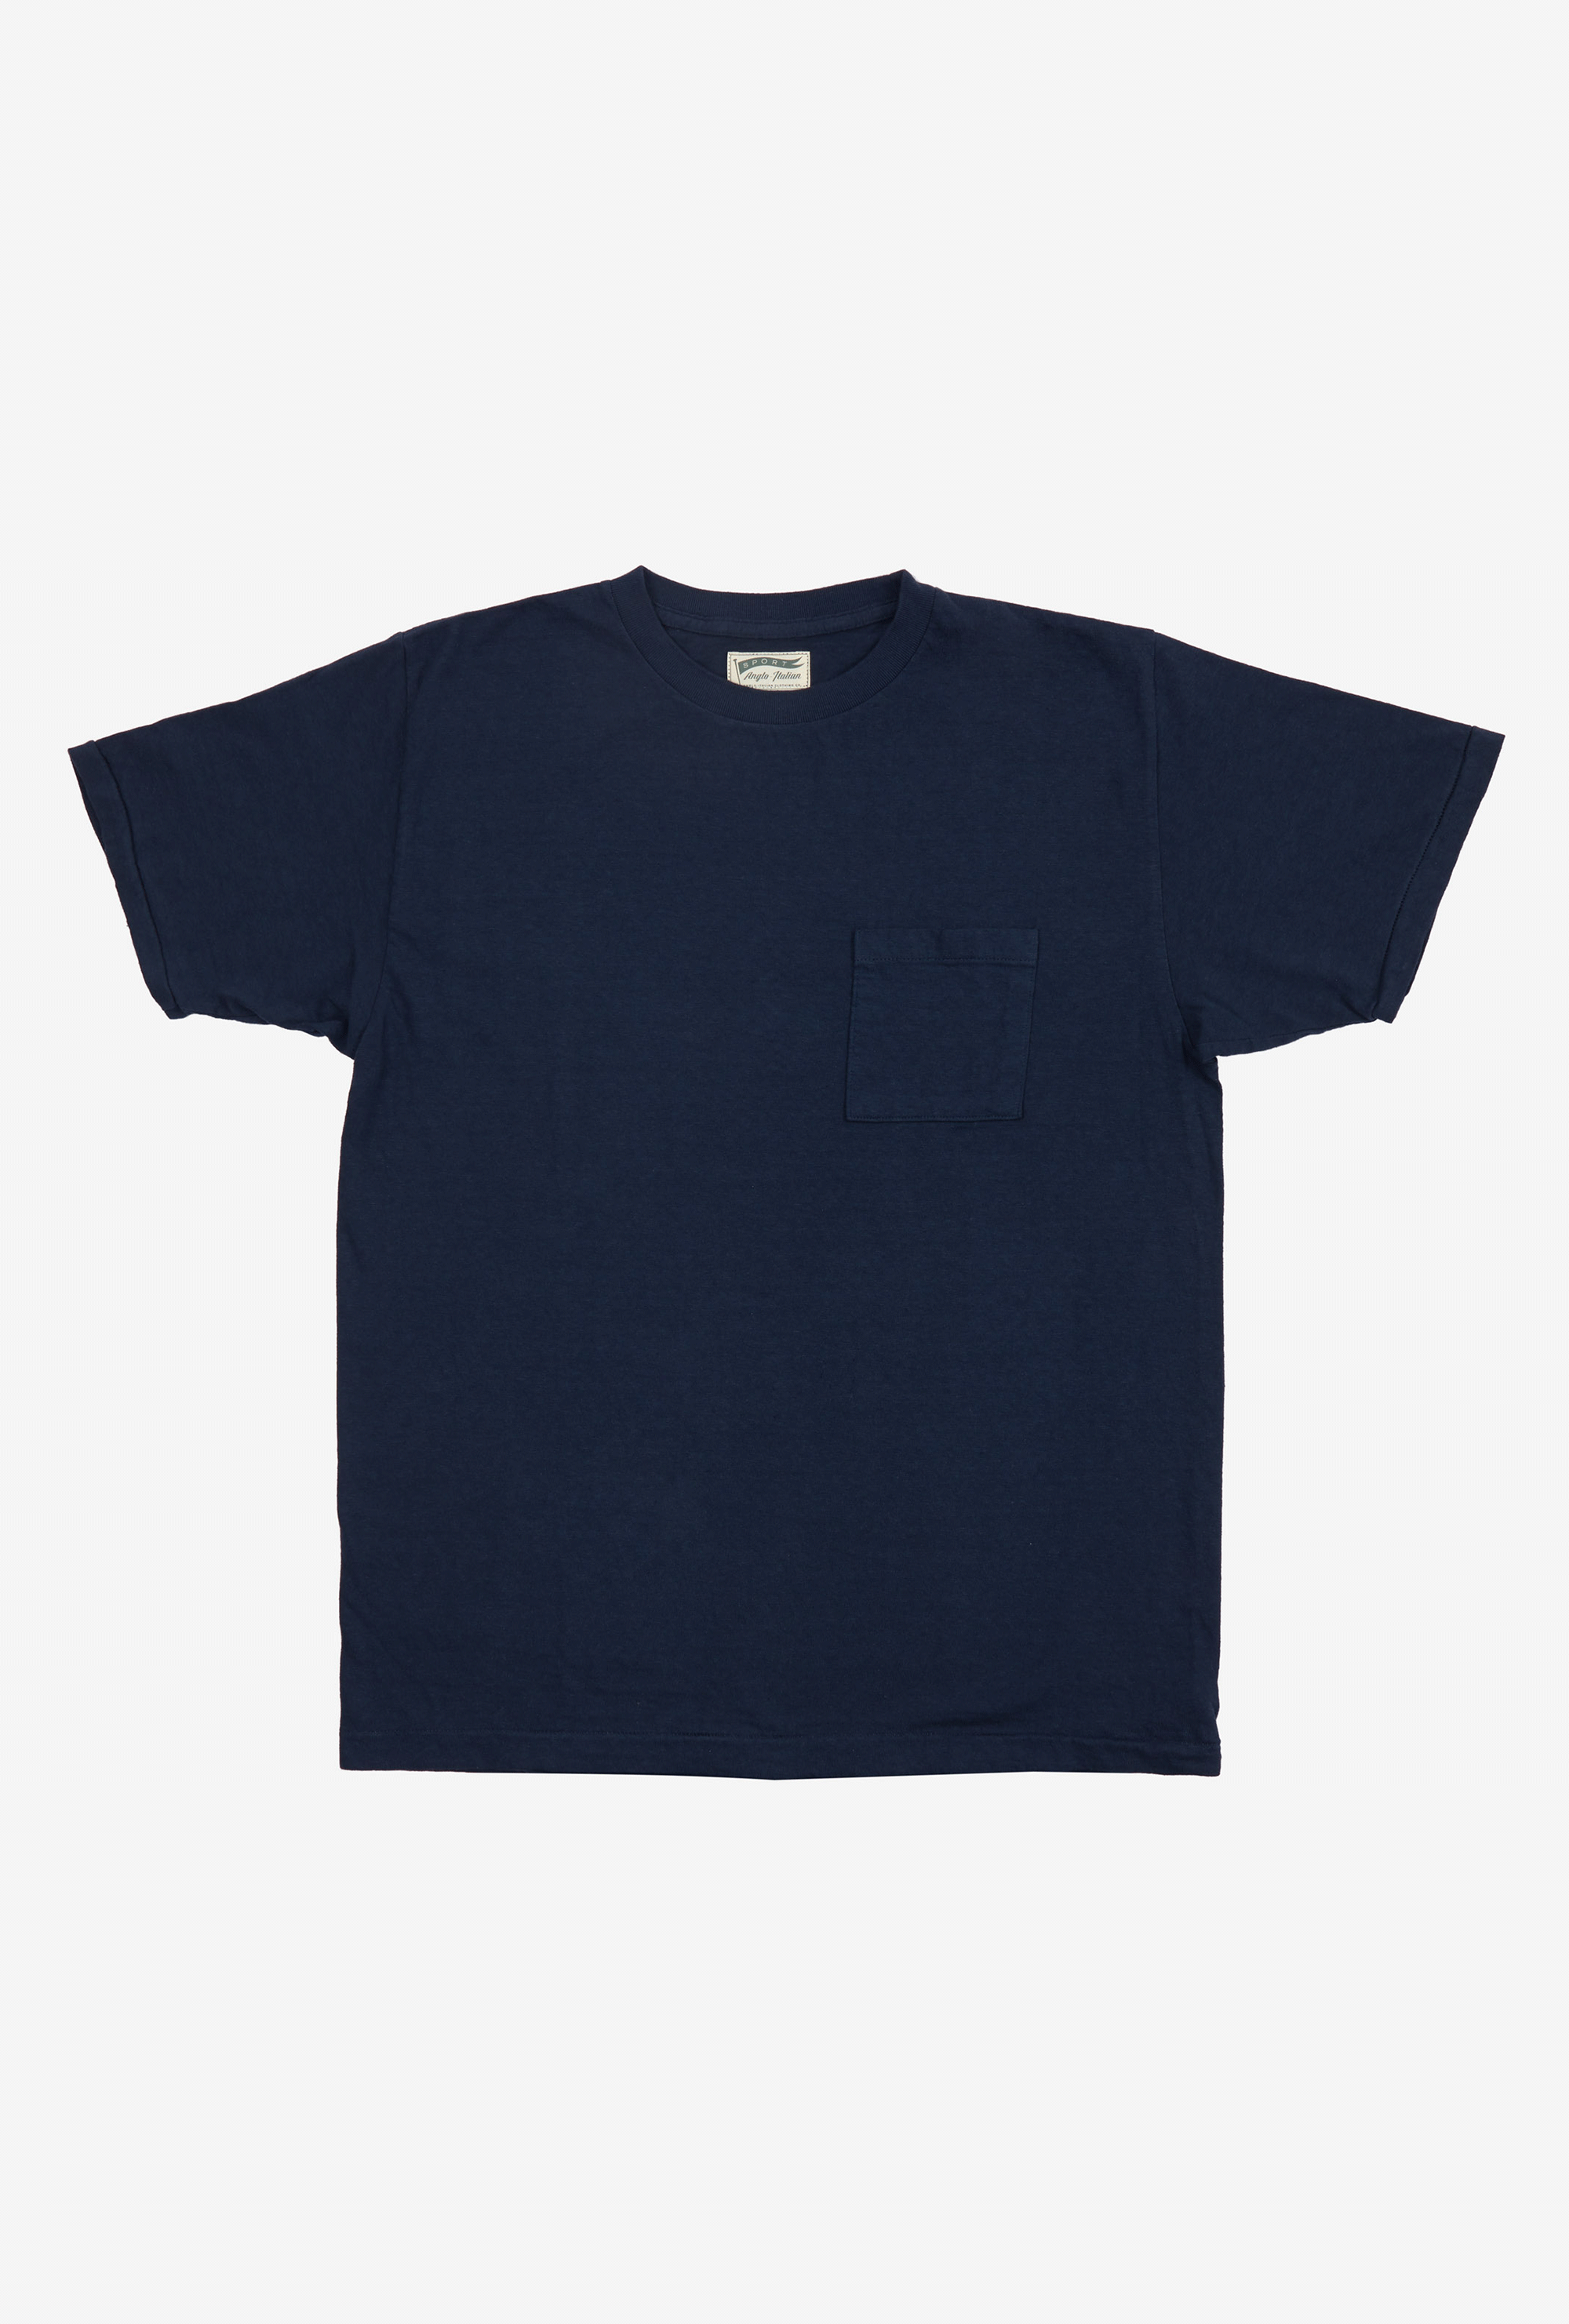 Cotton Pocket T-Shirt Navy